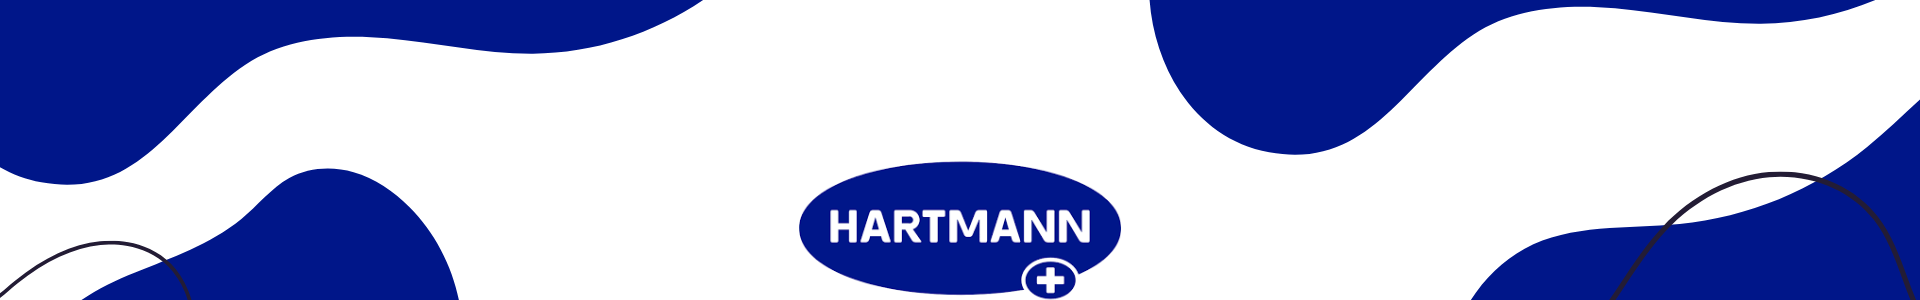 Marca Hartmann 